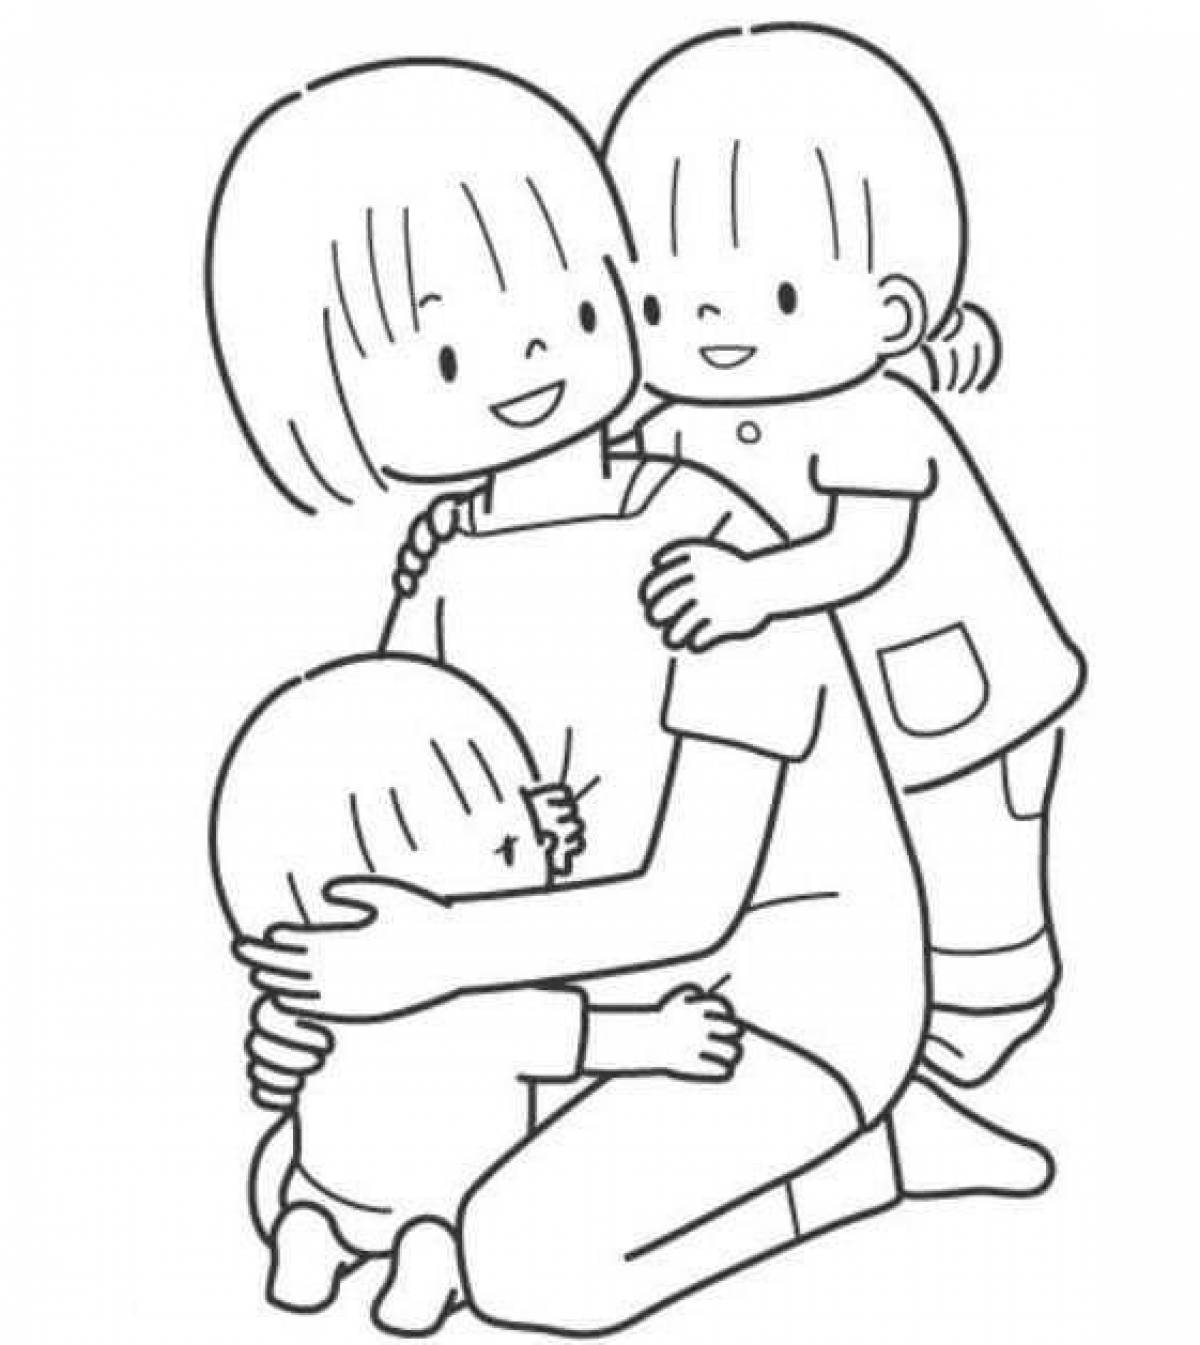 Kind coloring hugs